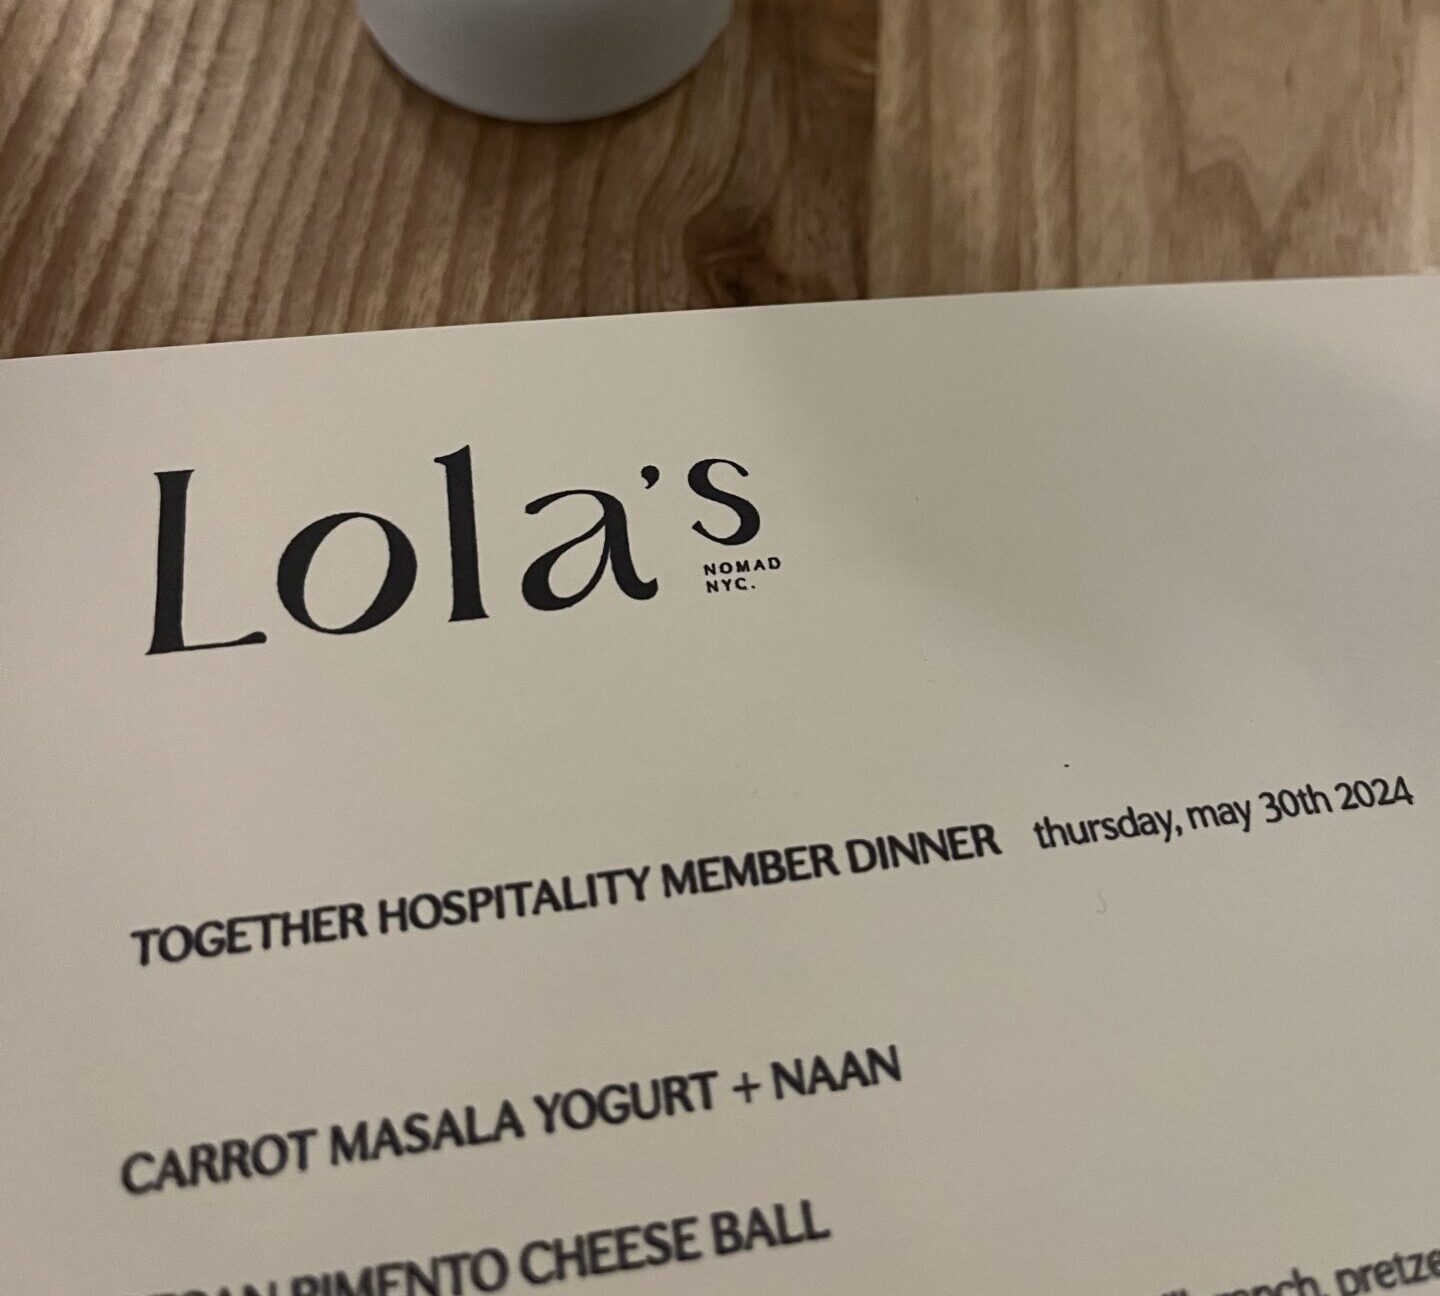 Dinner at Lola’s